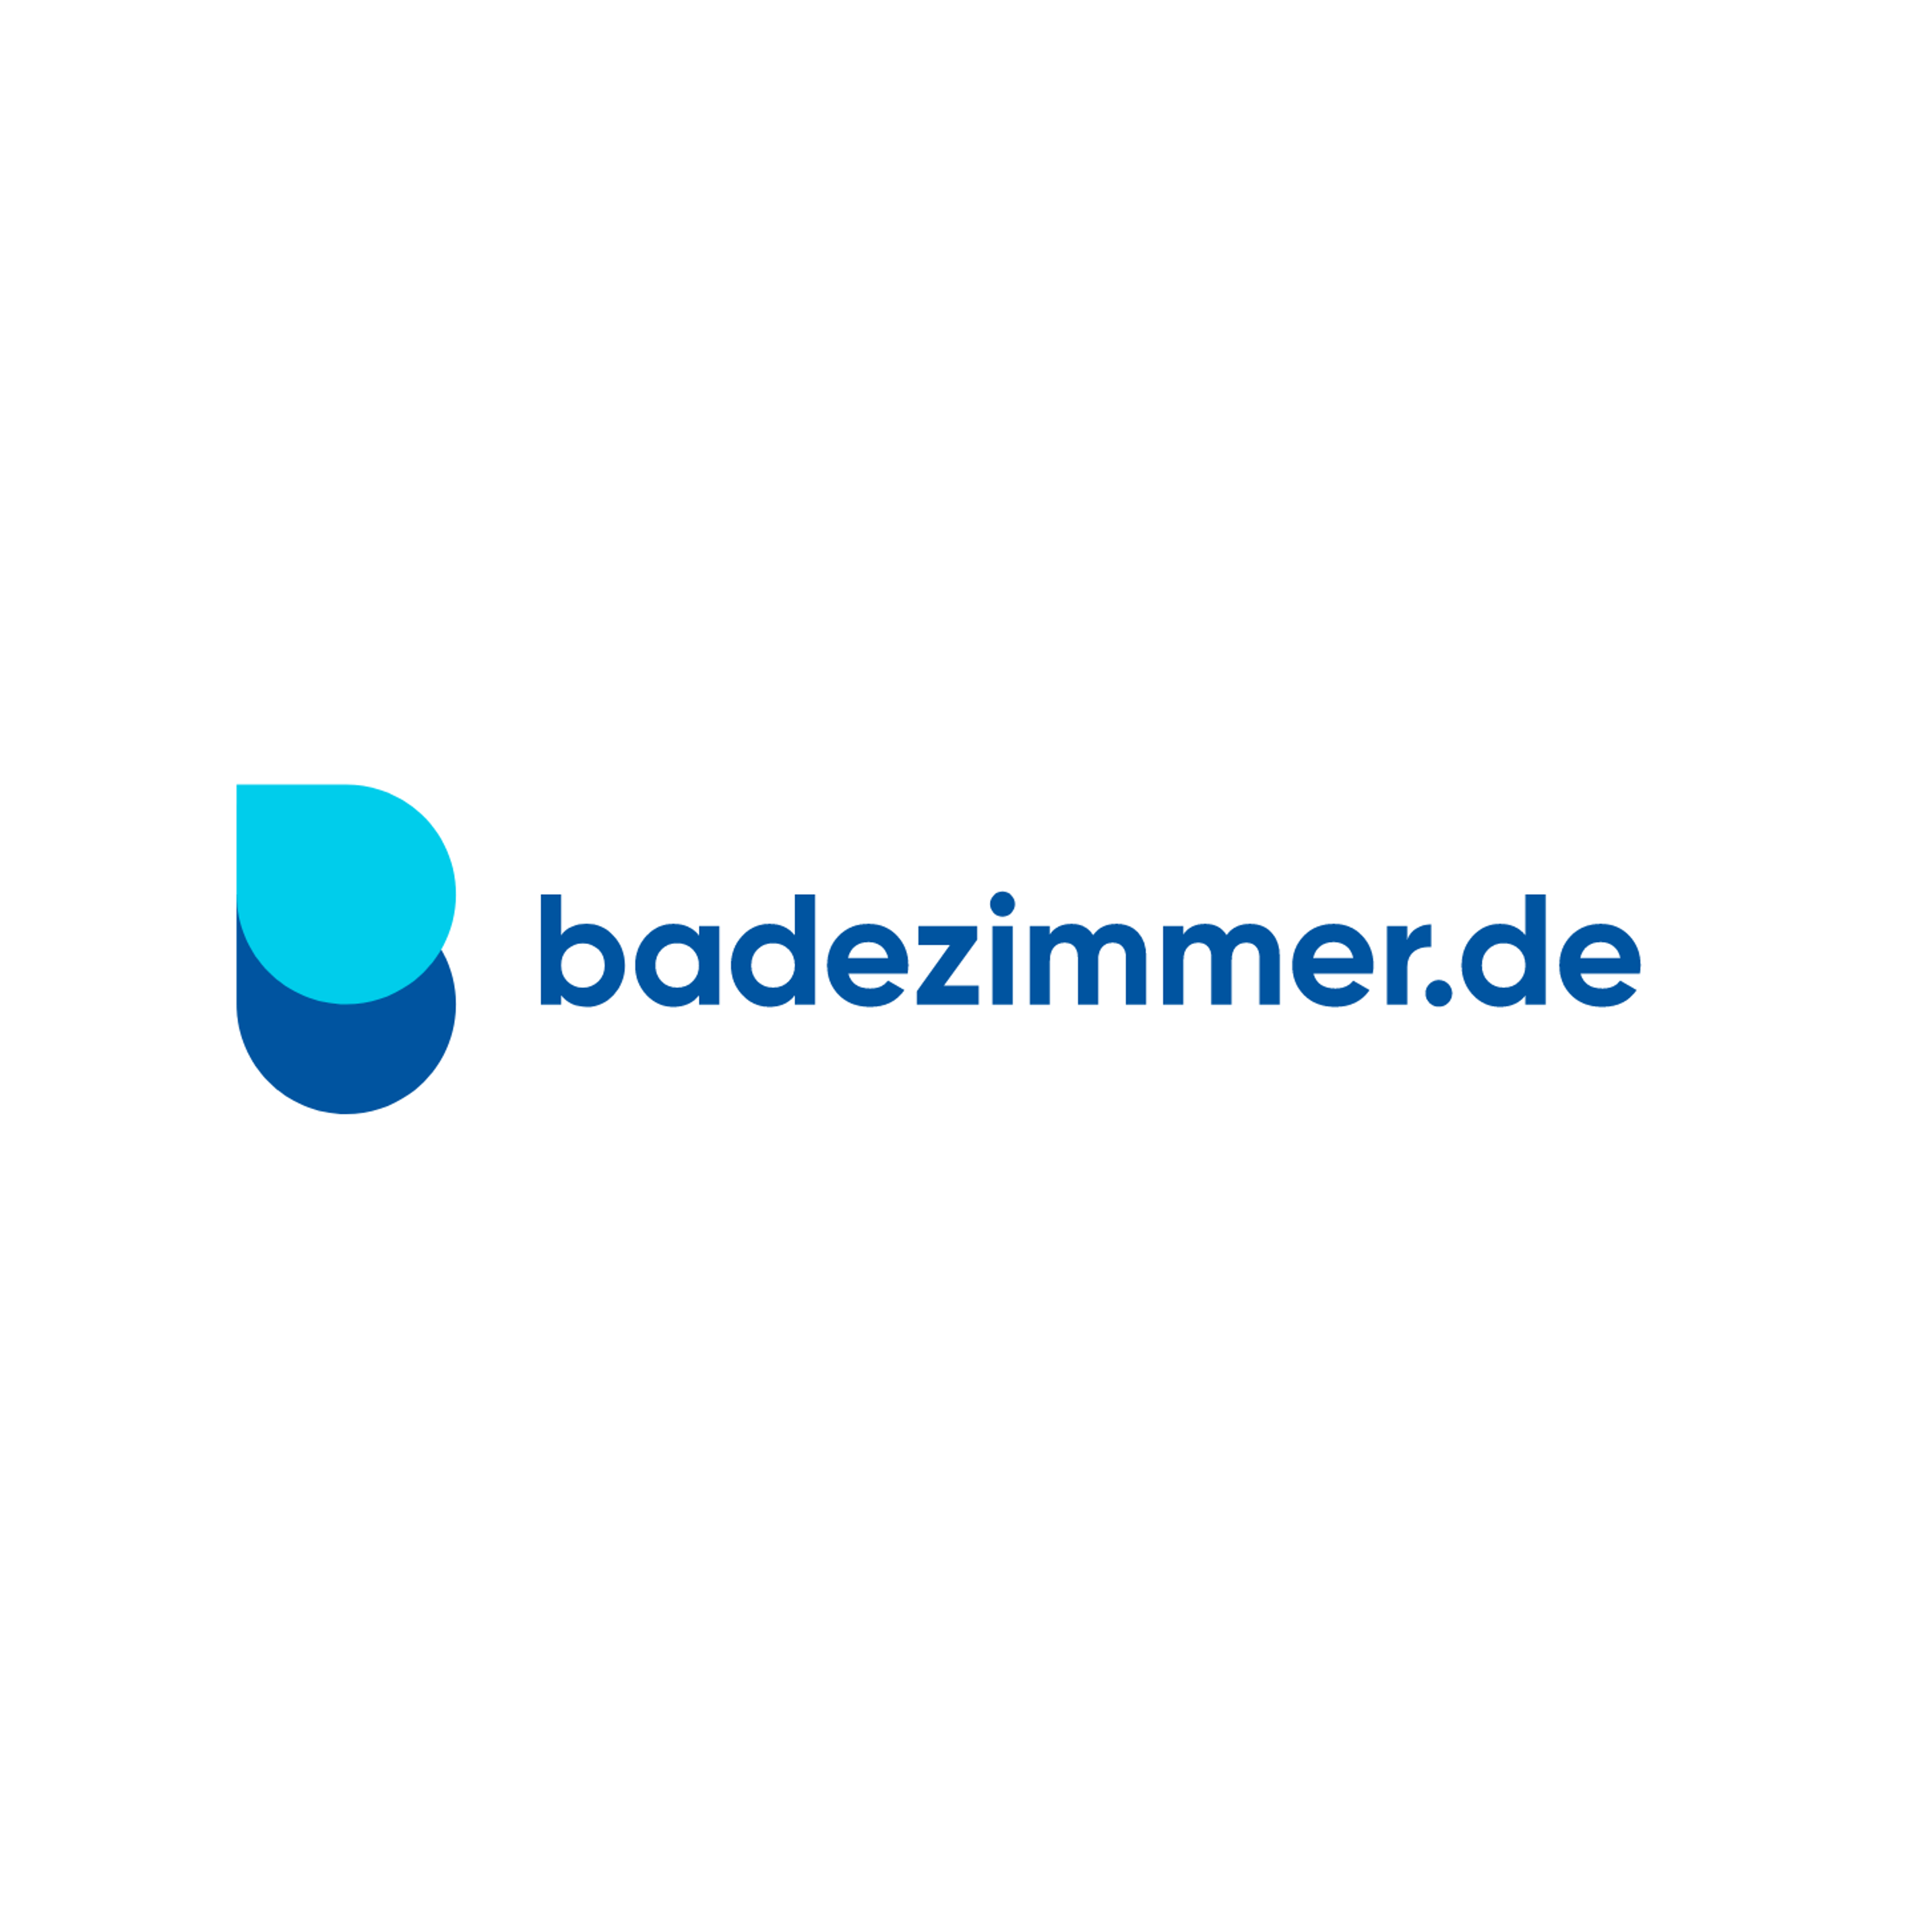 badezimmer.de Badausstellung Bochum - Otto Bechem in Bochum - Logo